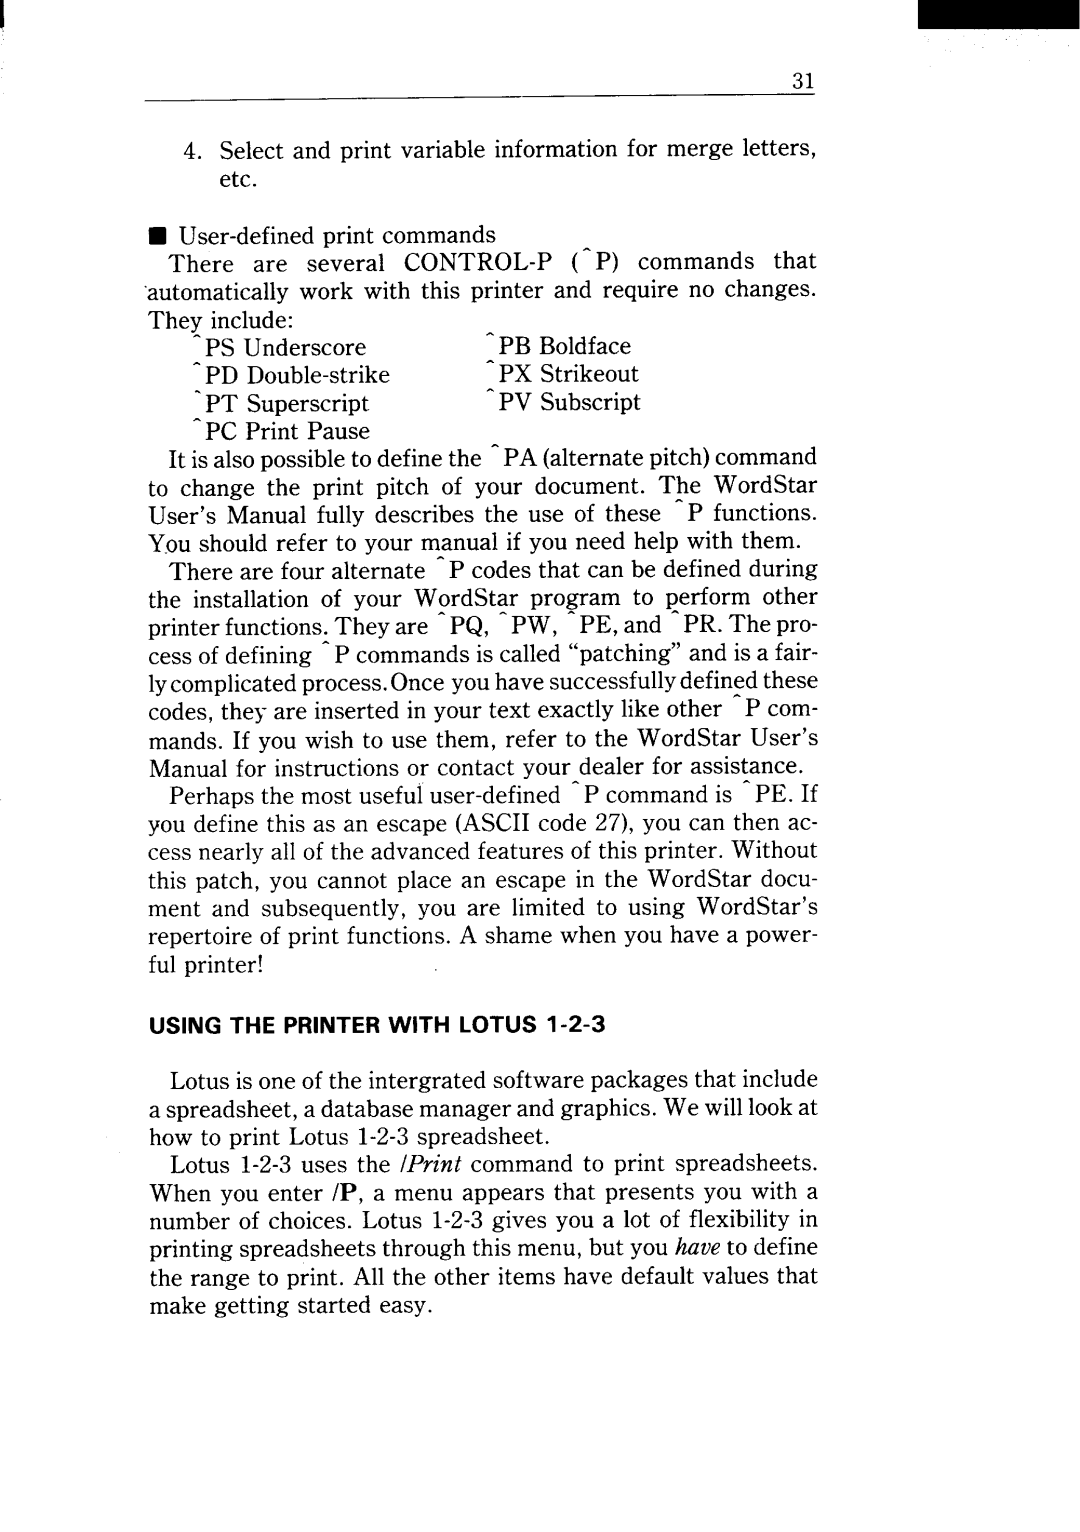 Star Micronics NX-15 user manual Using The Printerwith Lotus 